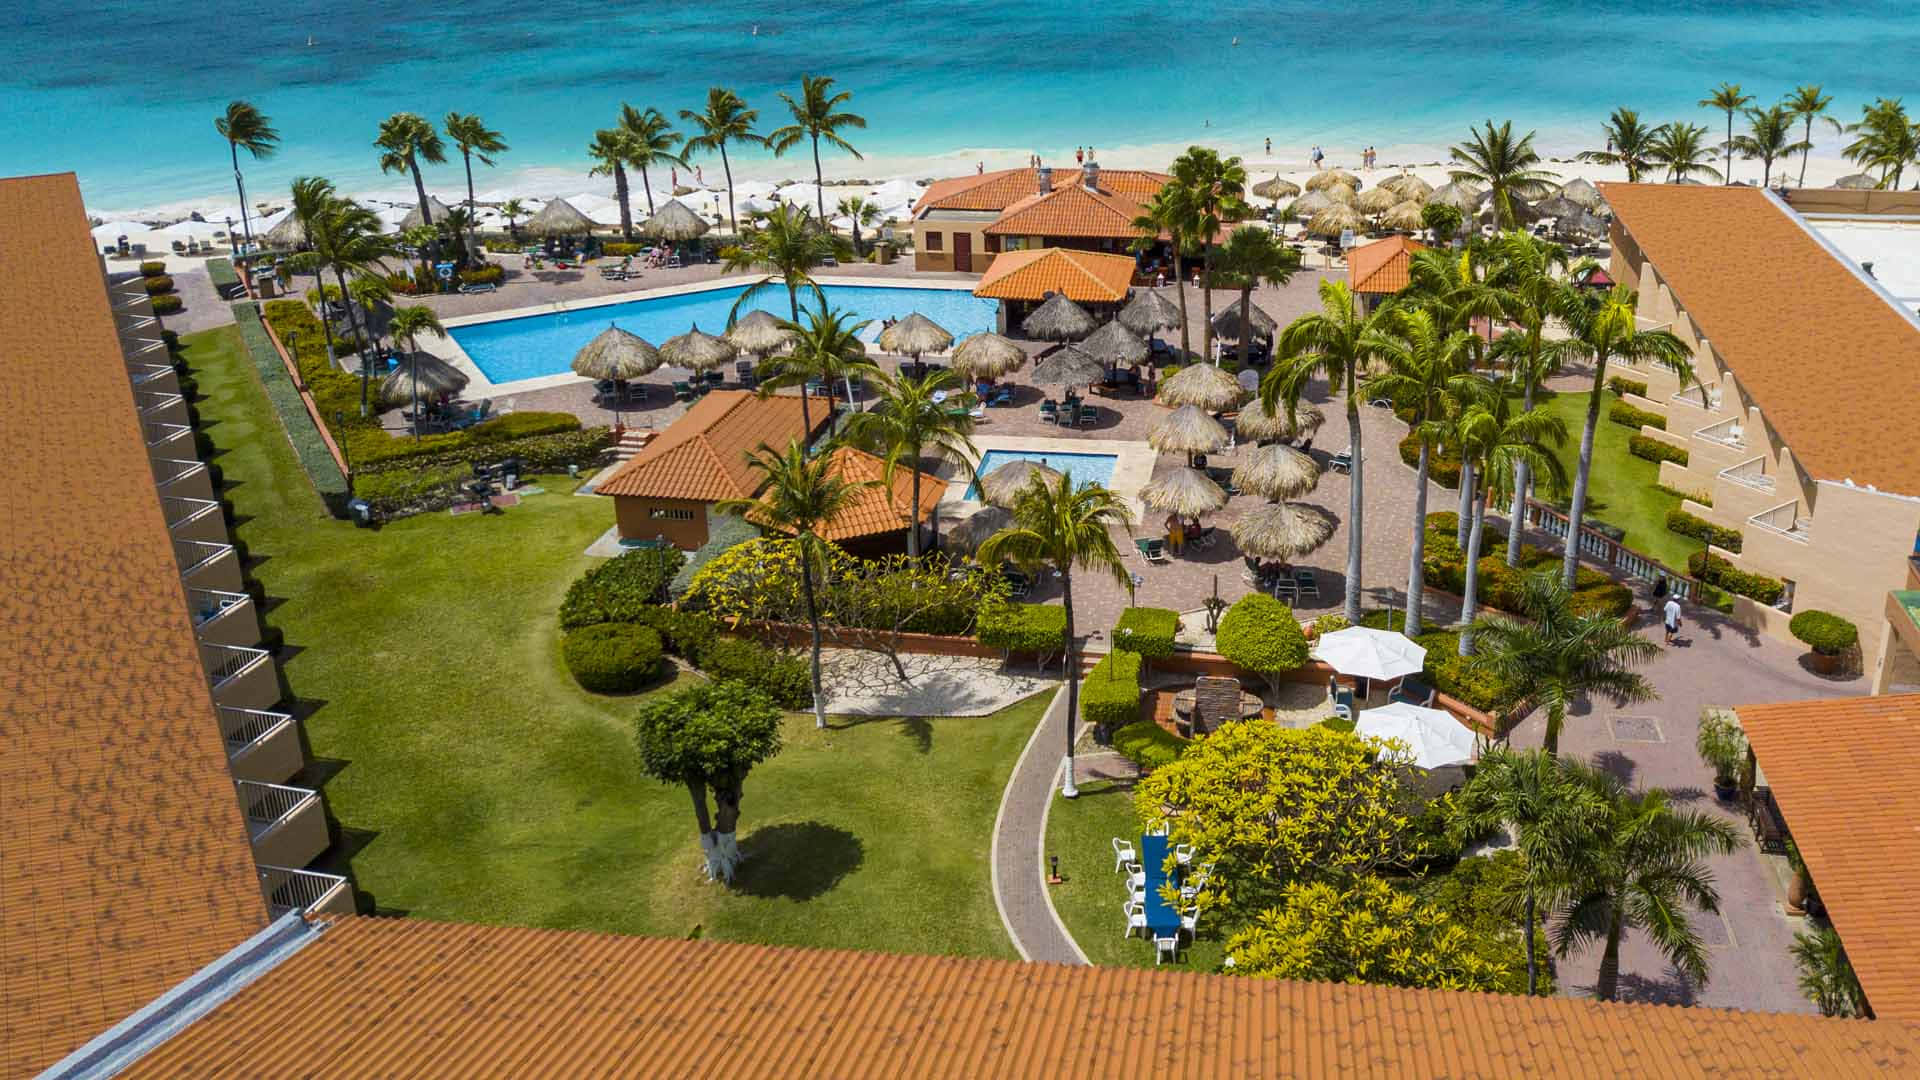 Download Aruba Beach Club Resort Pictures 